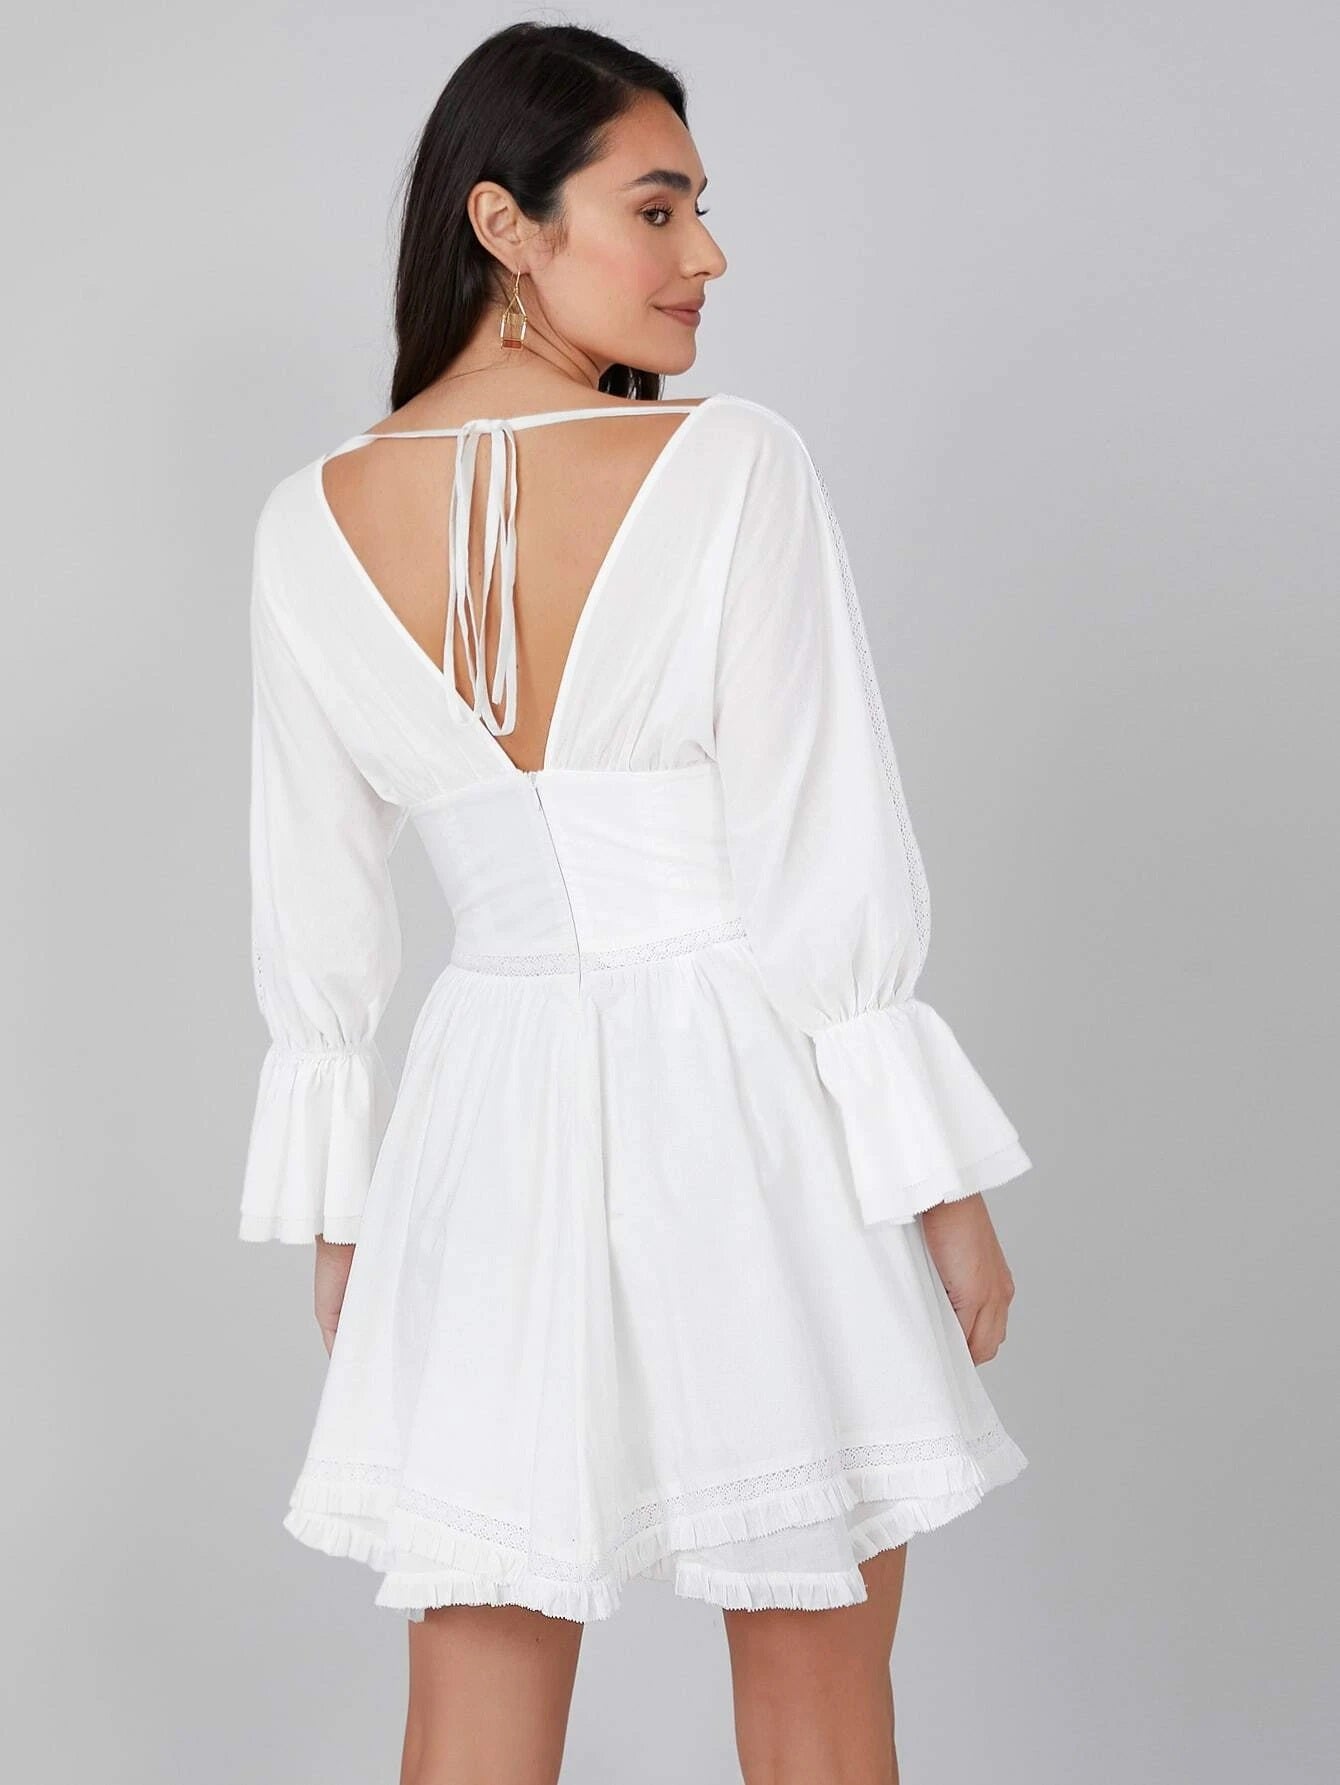 CM-ES201839 Women Elegant European Style V-Neck Empire Waist A-Line Dress - White